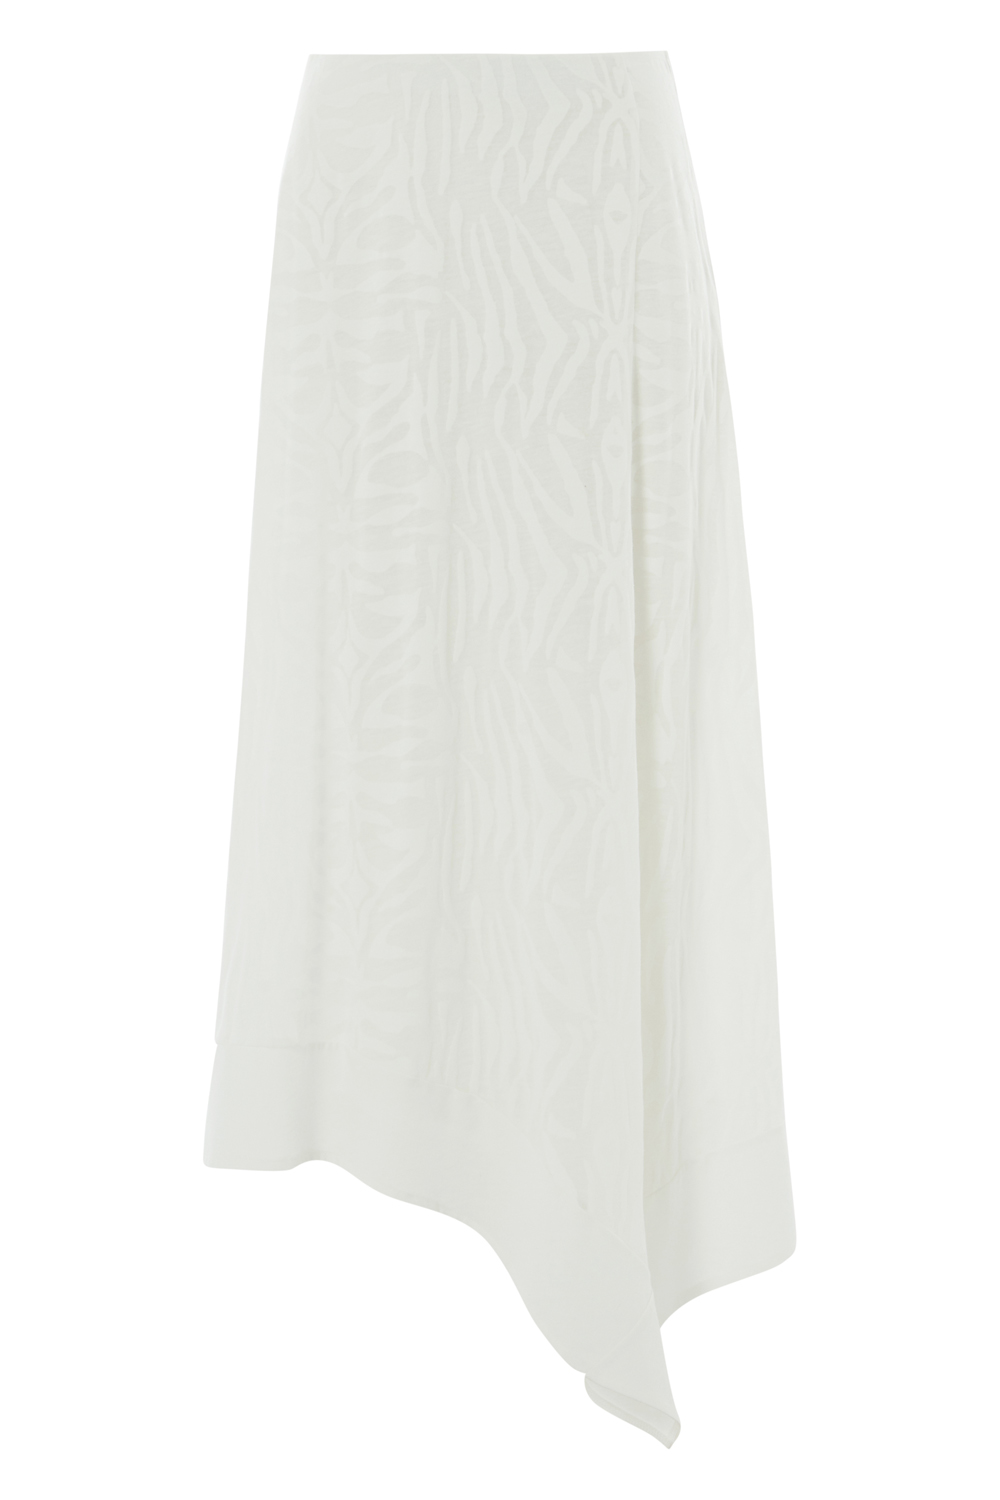 Ivory  Hanky Hem Burnout Skirt , Image 4 of 4